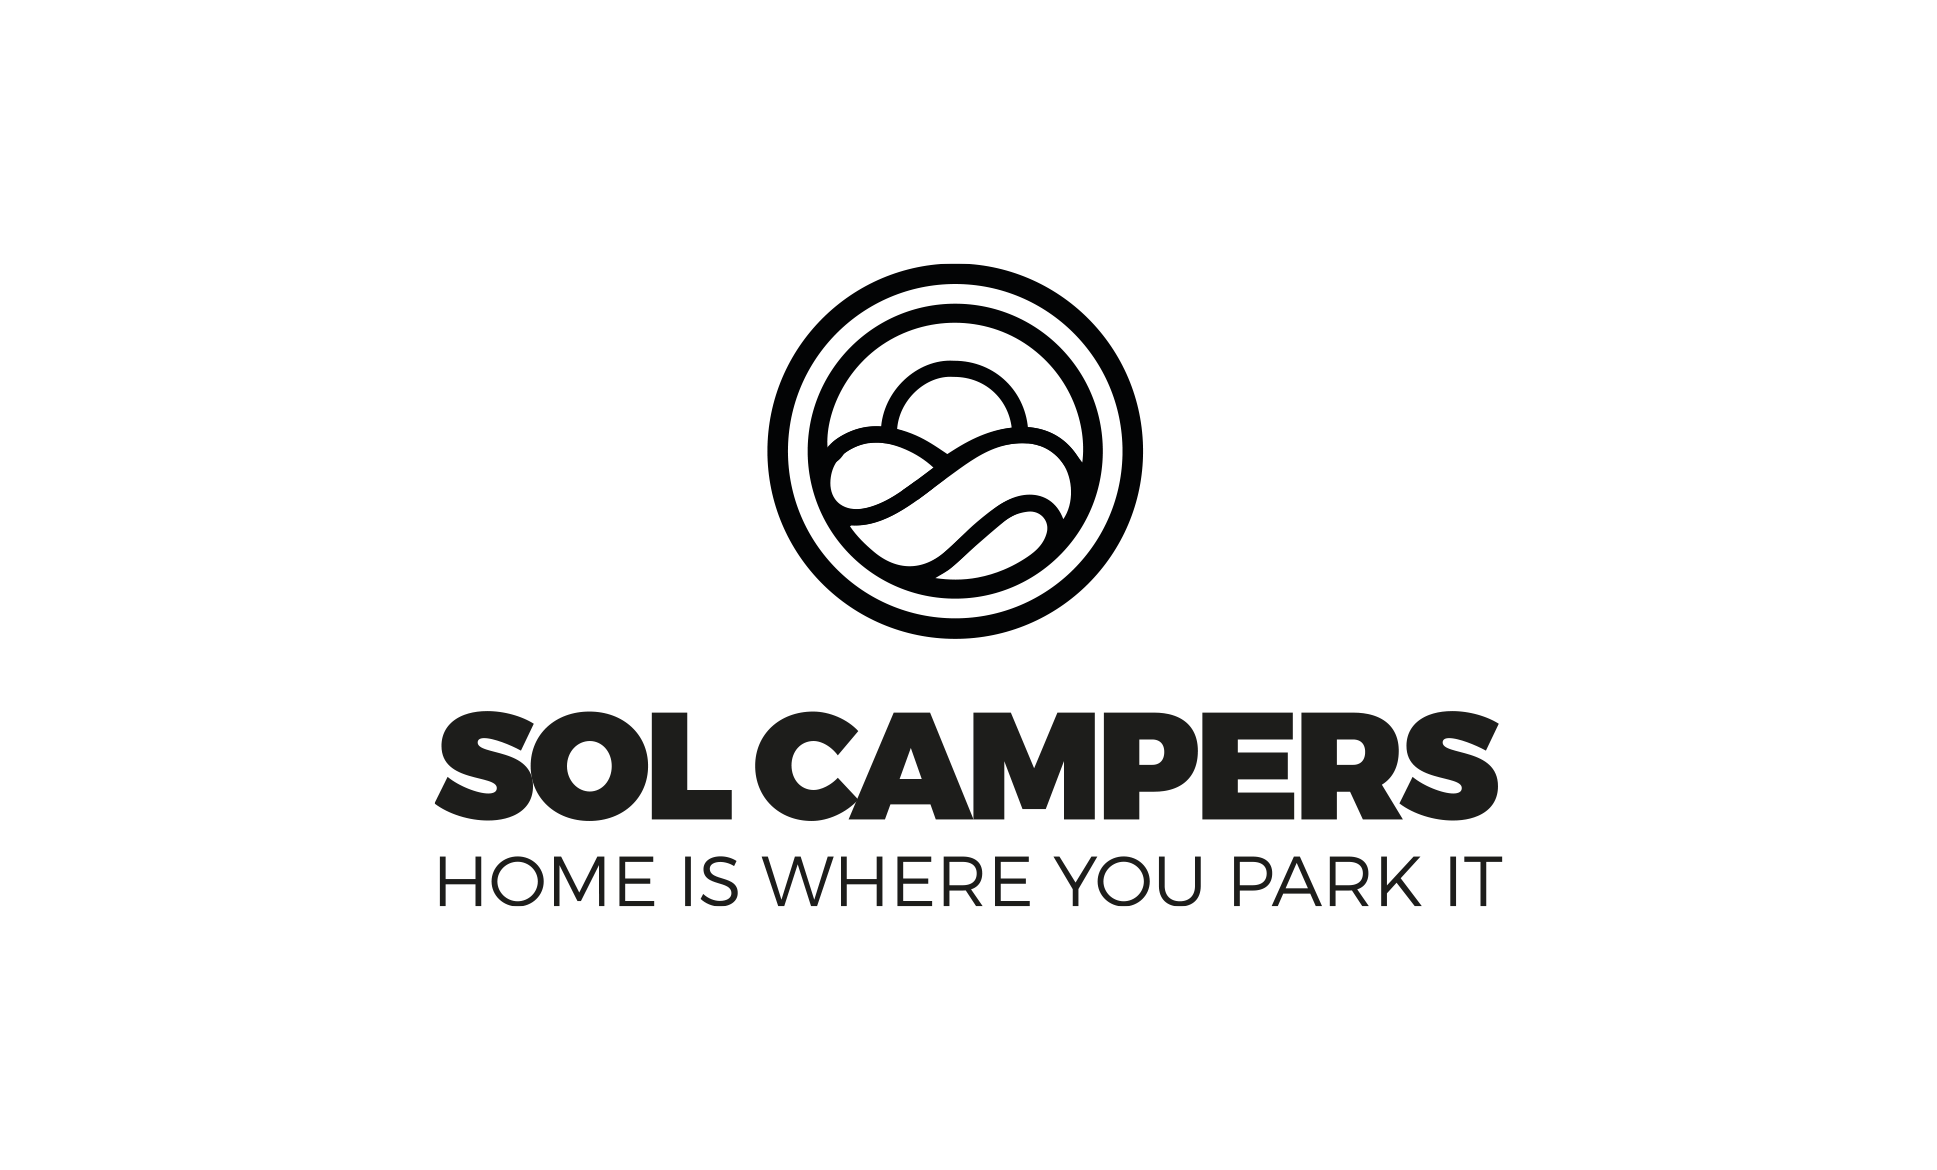 Sol campers logo 1